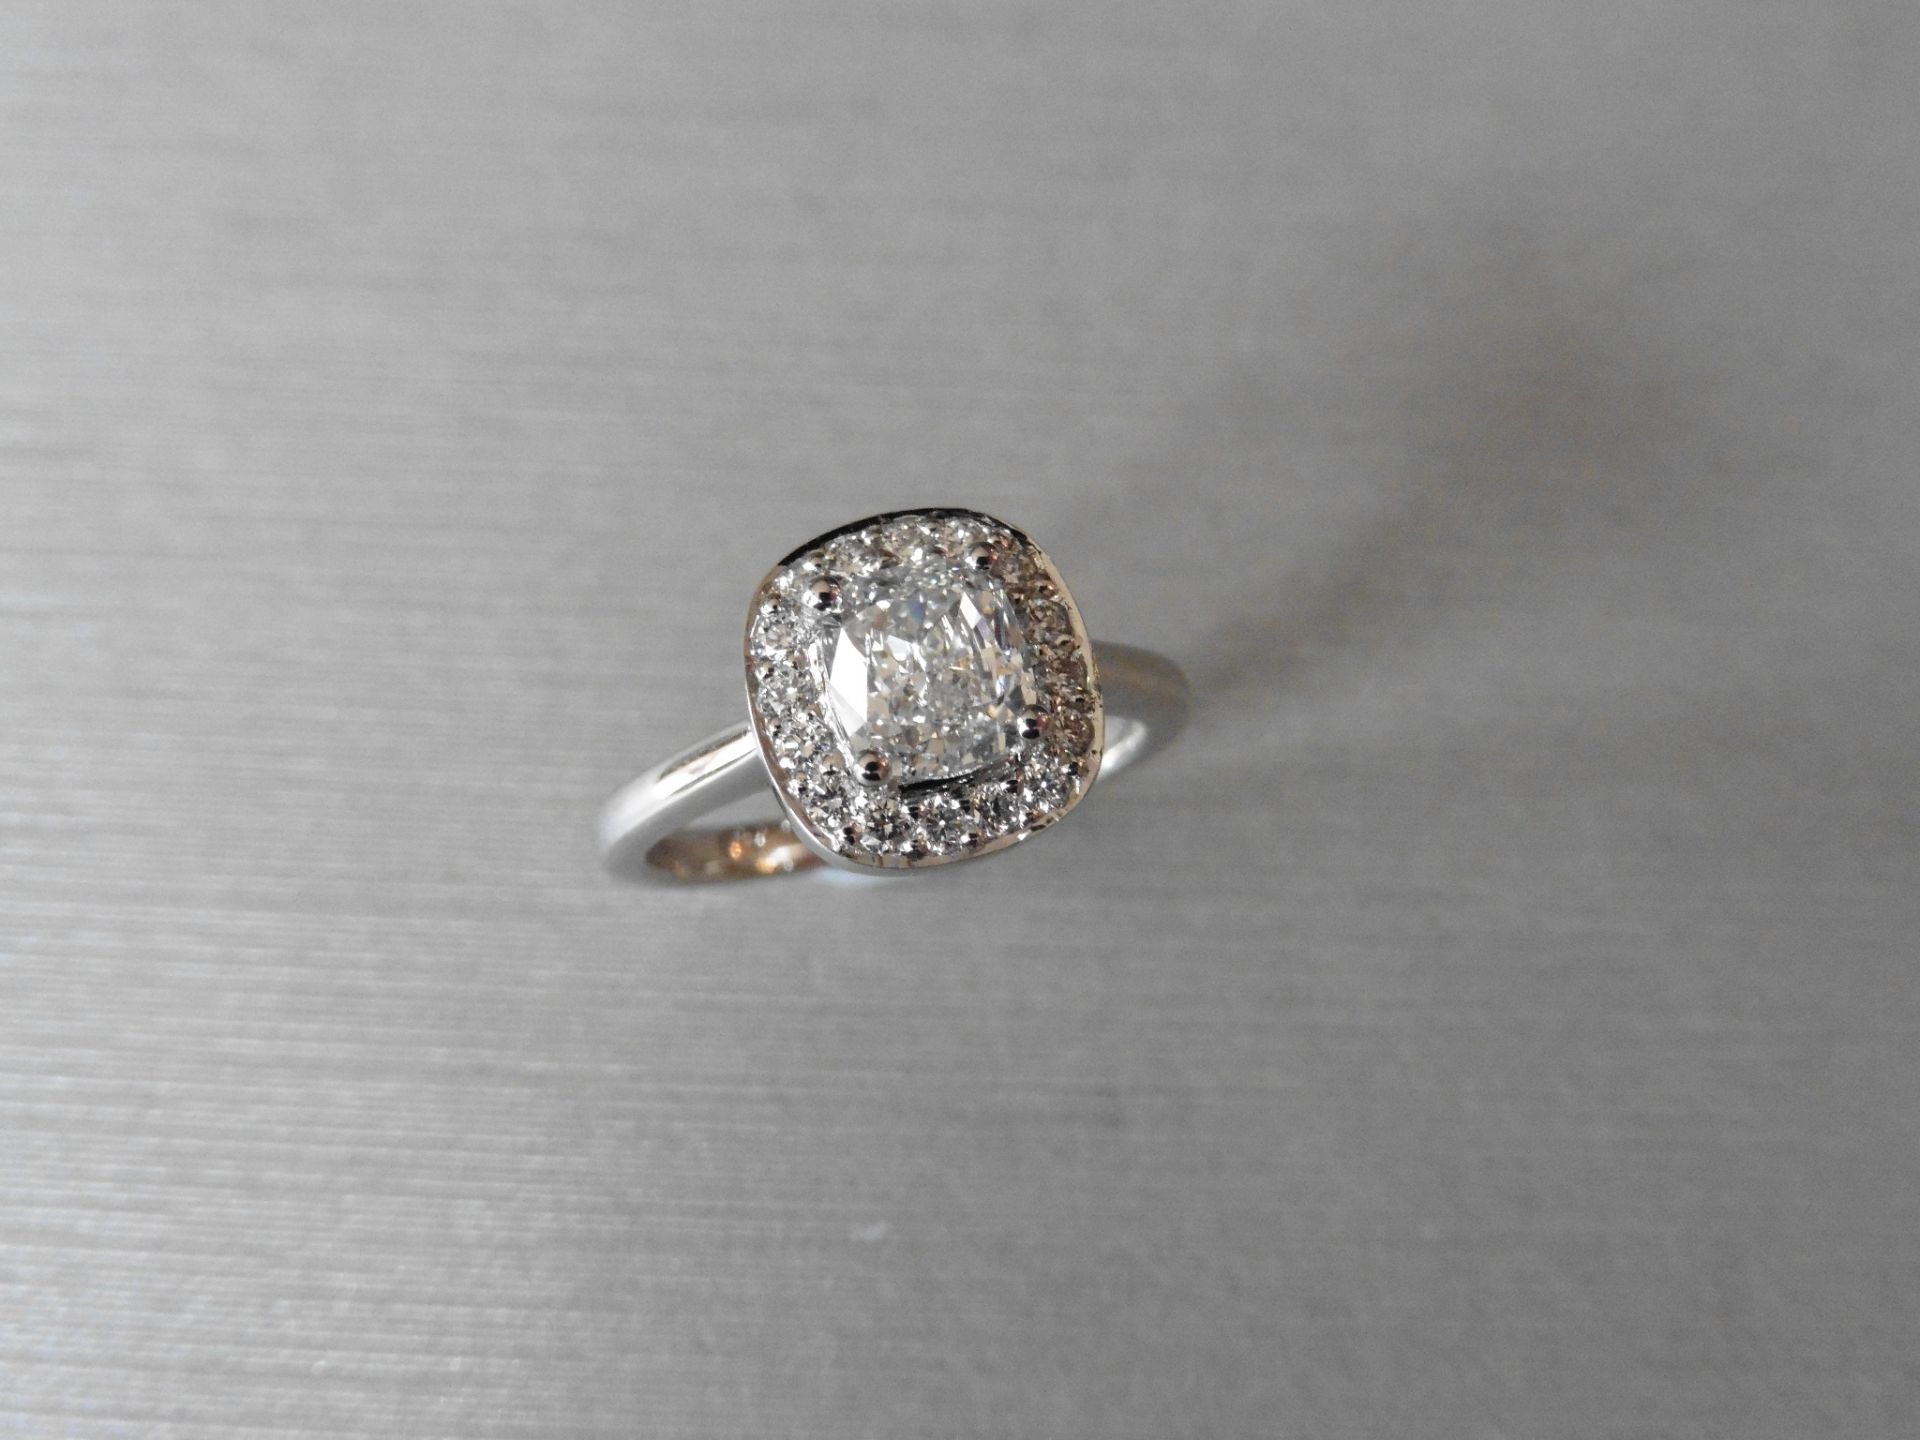 Platinum diamond set solitaire ring set with a 1.20ct cushion cut diamond, D colour and VS2 clarity.